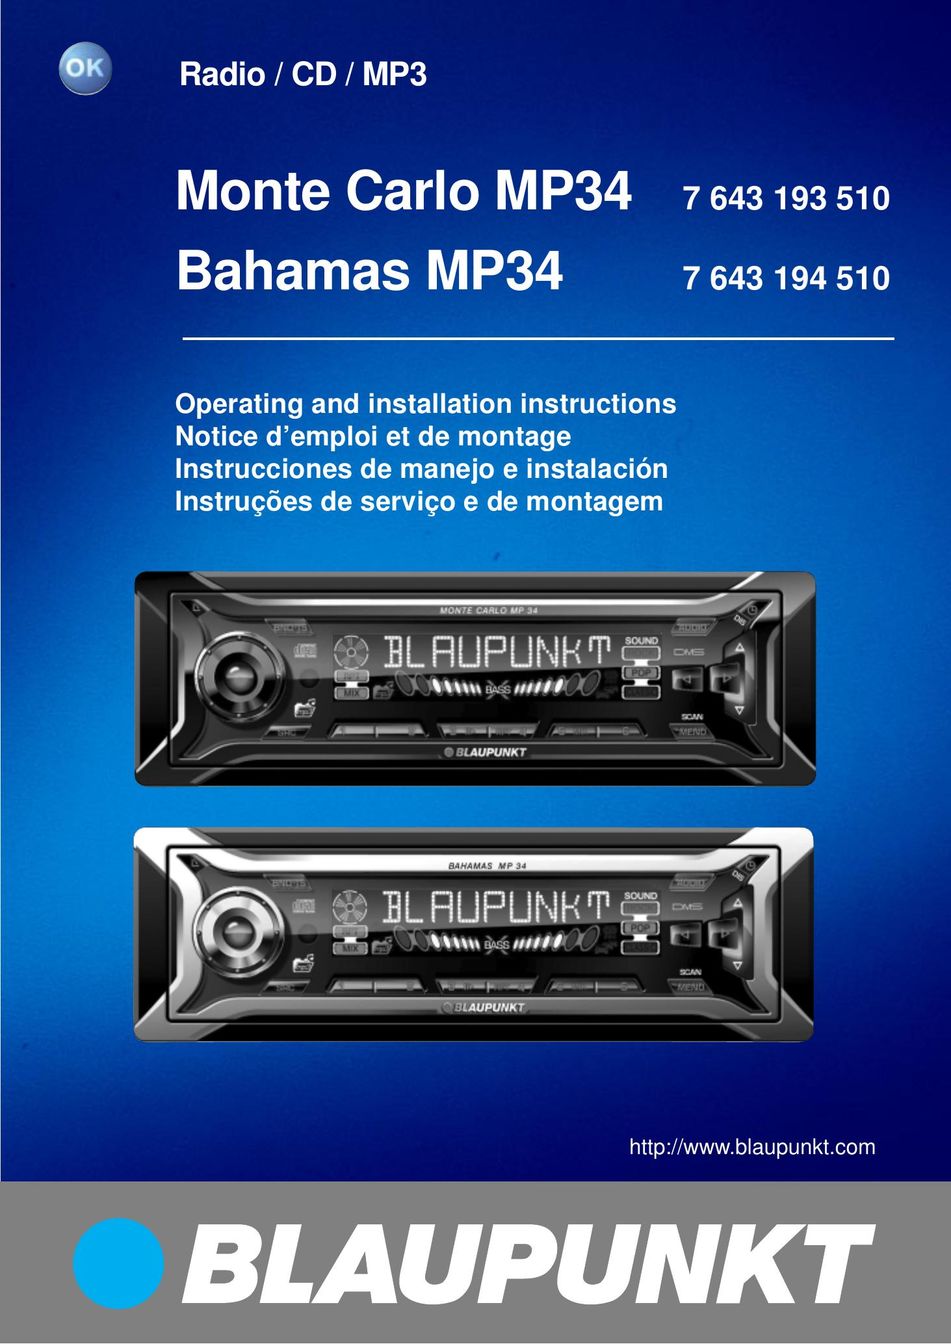 Blaupunkt Bahamas MP34 Car Stereo System User Manual